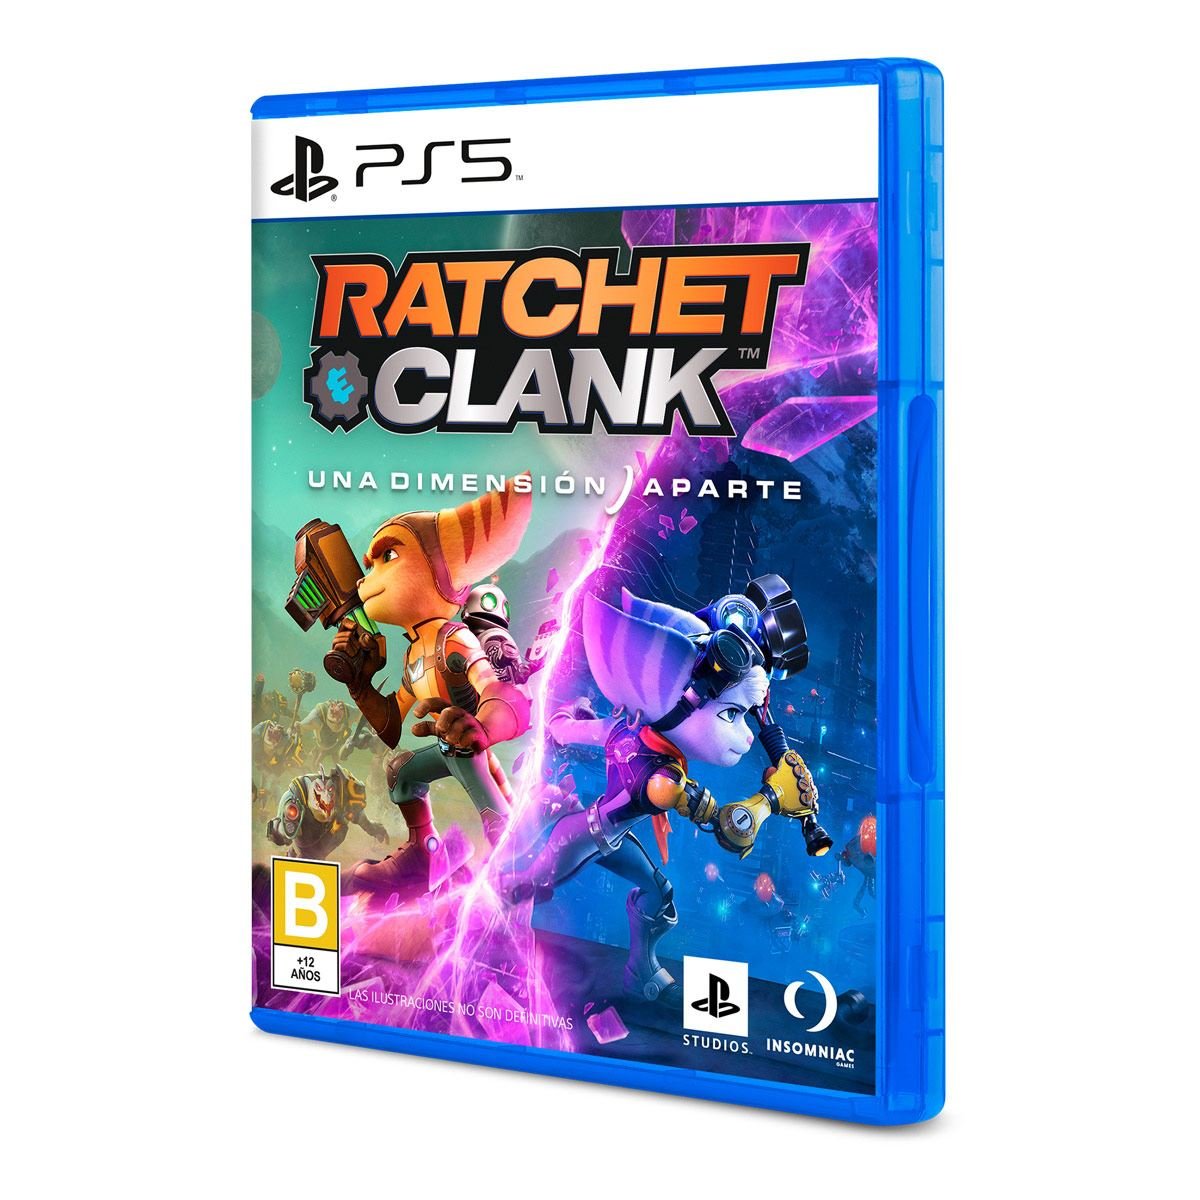 PS5 Ratchet & Clank Rift Apart